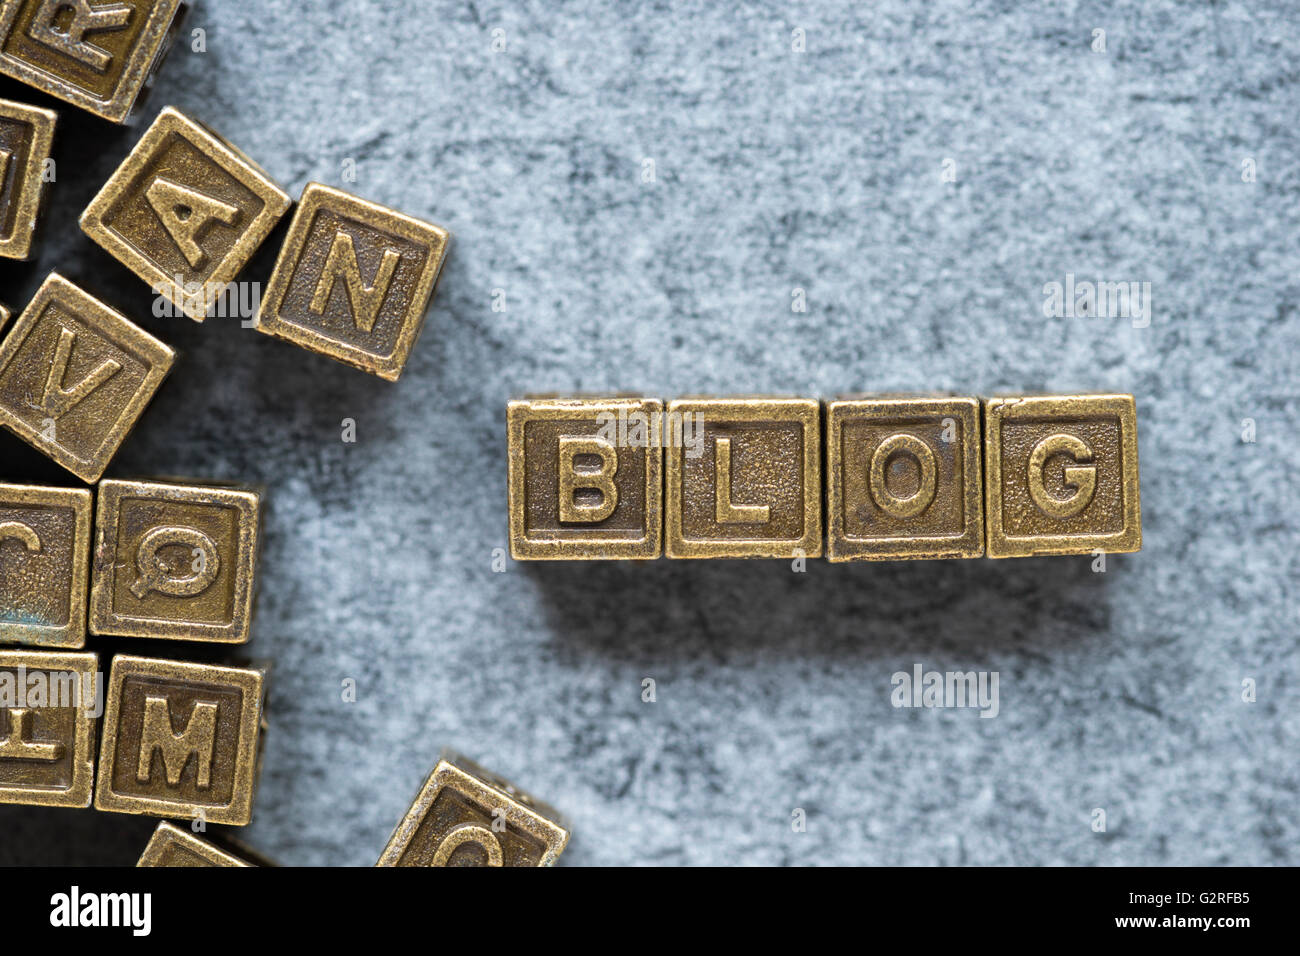 blog word made from metallic blocks over grunge background Stock Photo